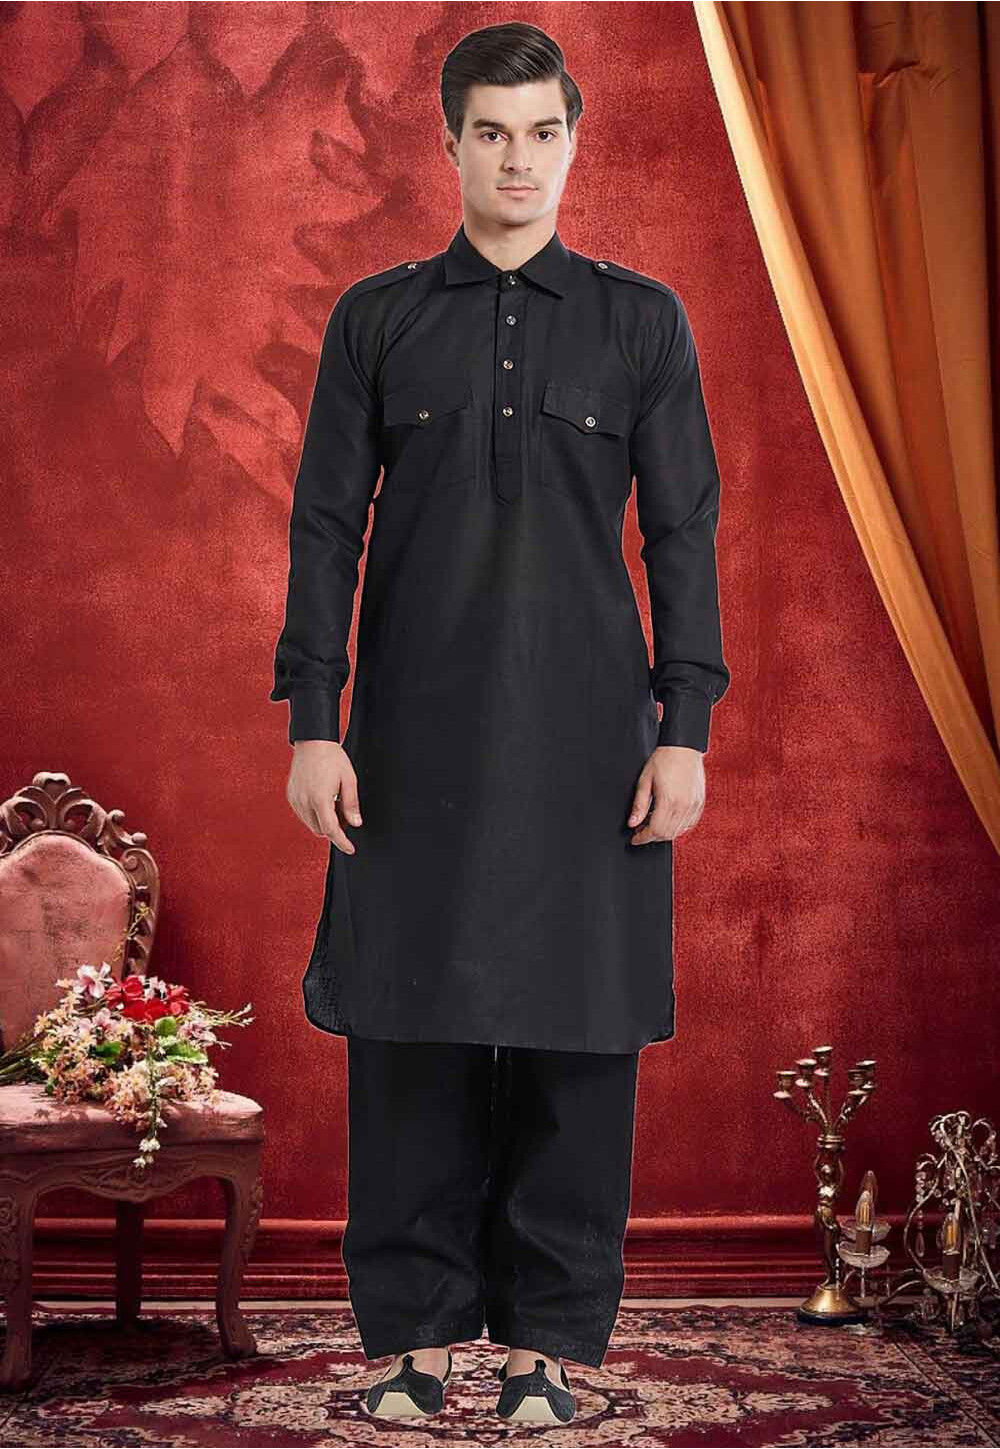 Black Colour Mens Pathani Kurta Pajama in Cotton Fabric.